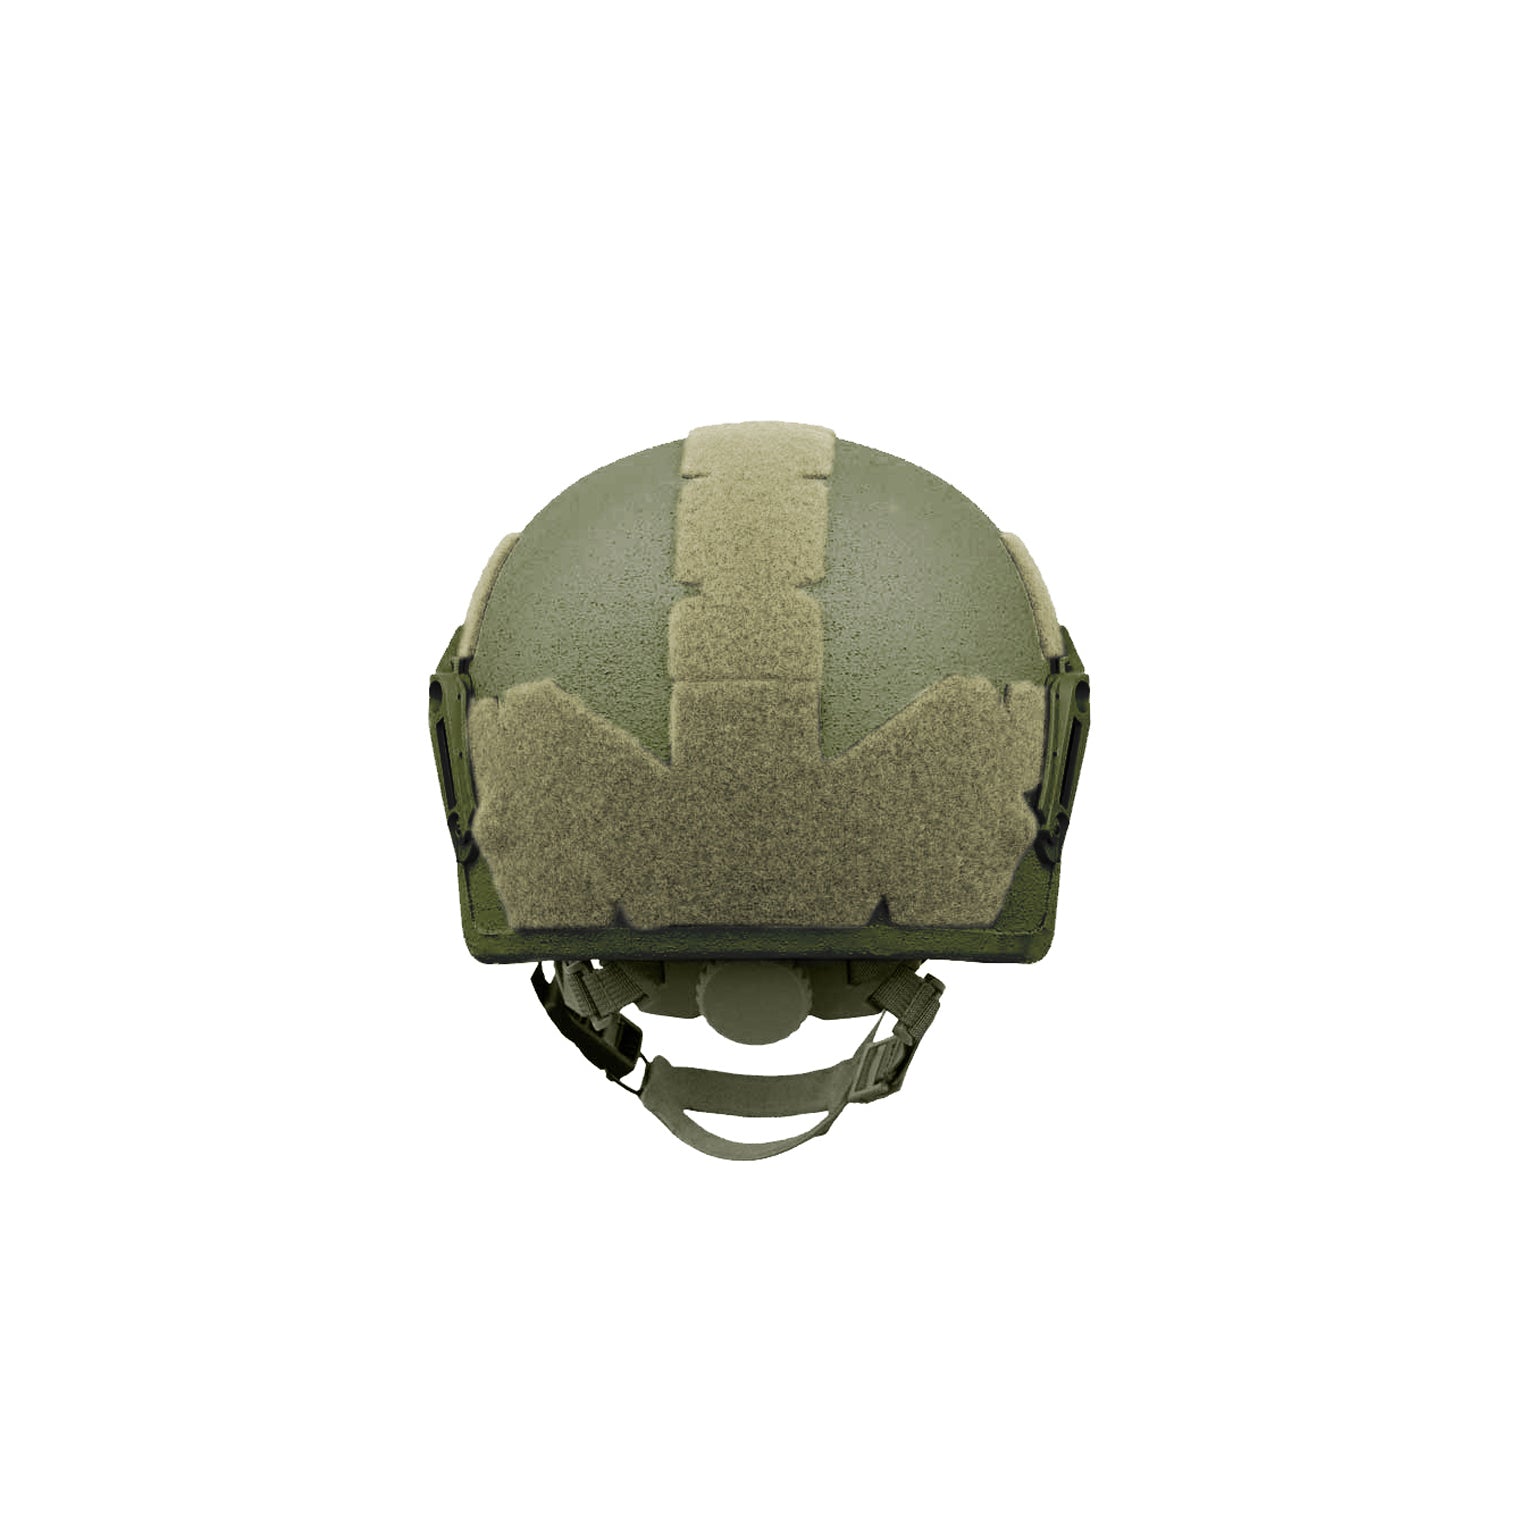 od green Gen 3 ballistic helmet